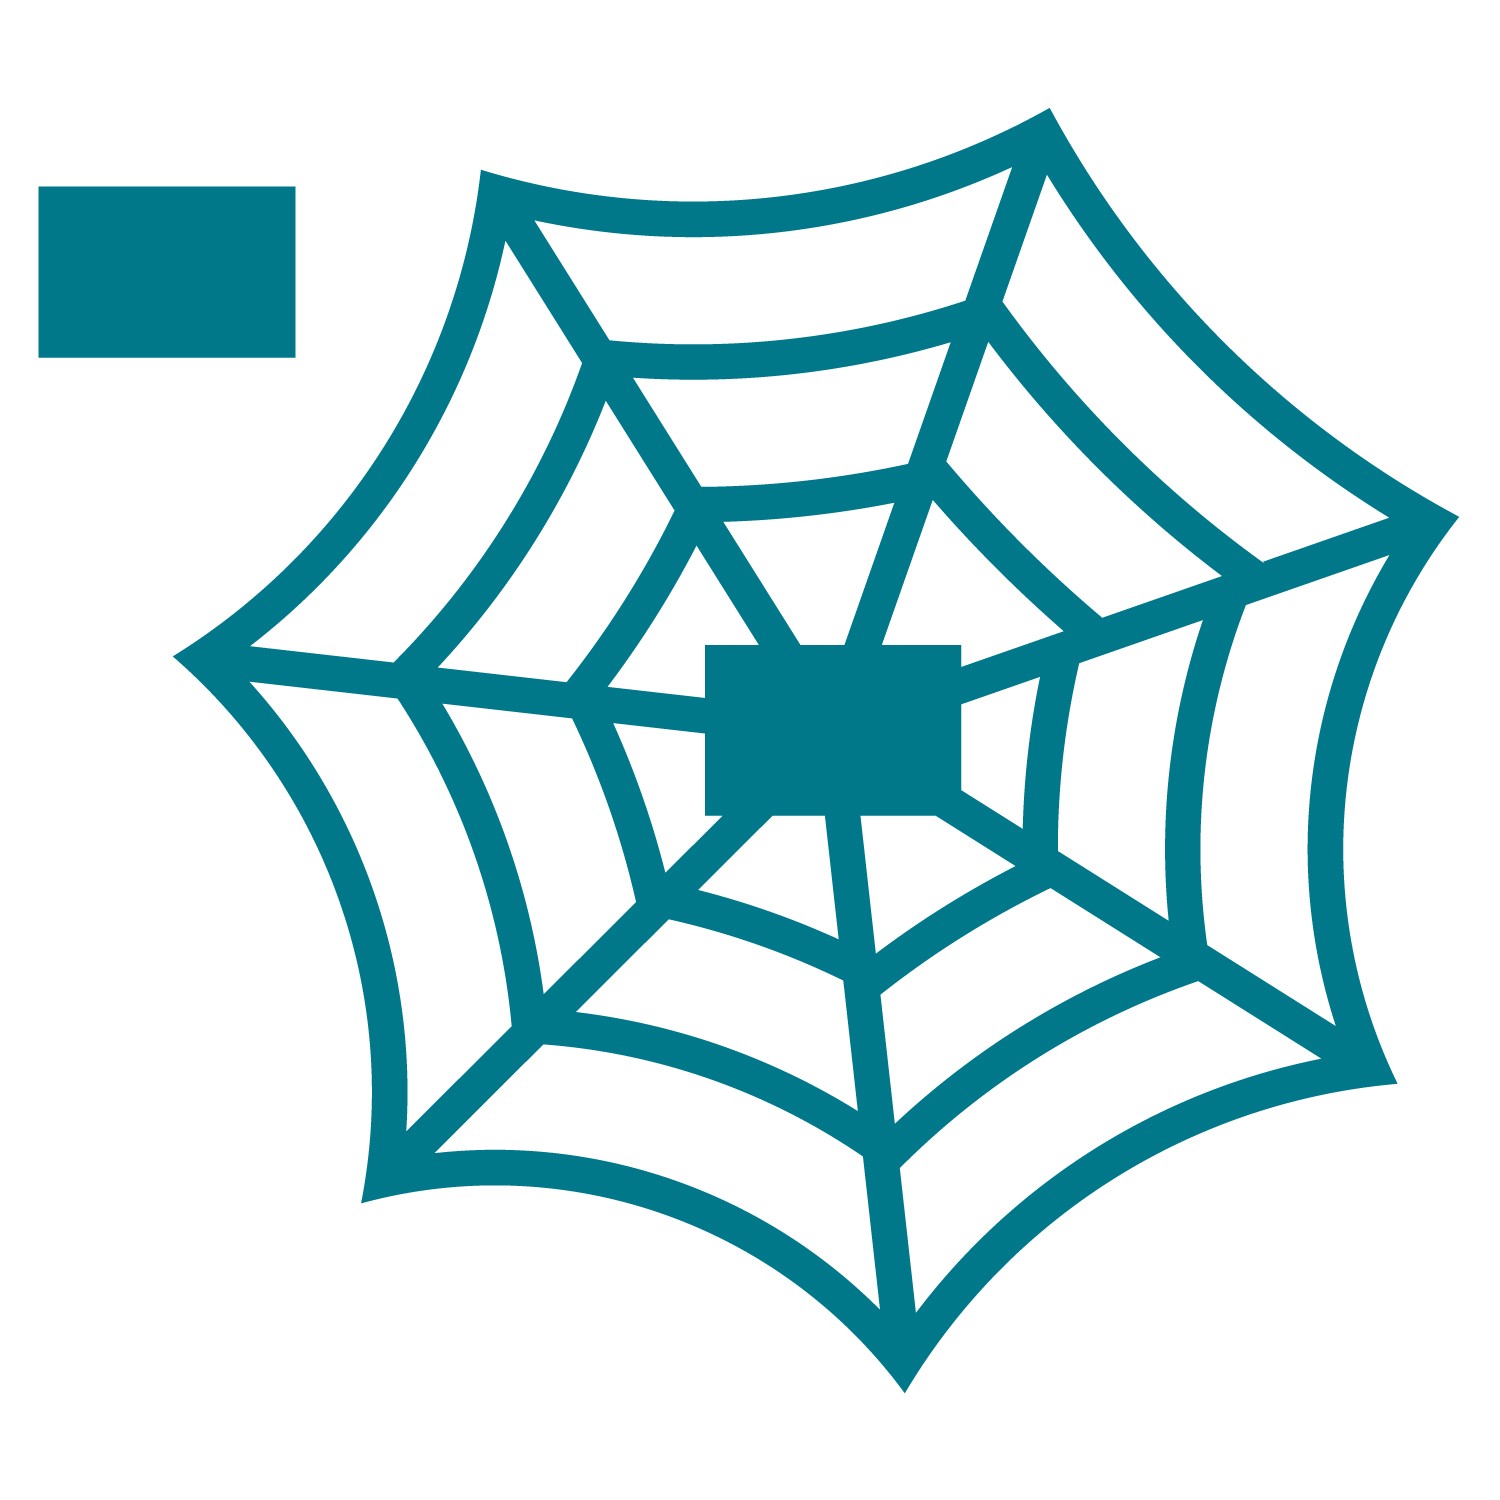 Spider Web Template ClipArt Best